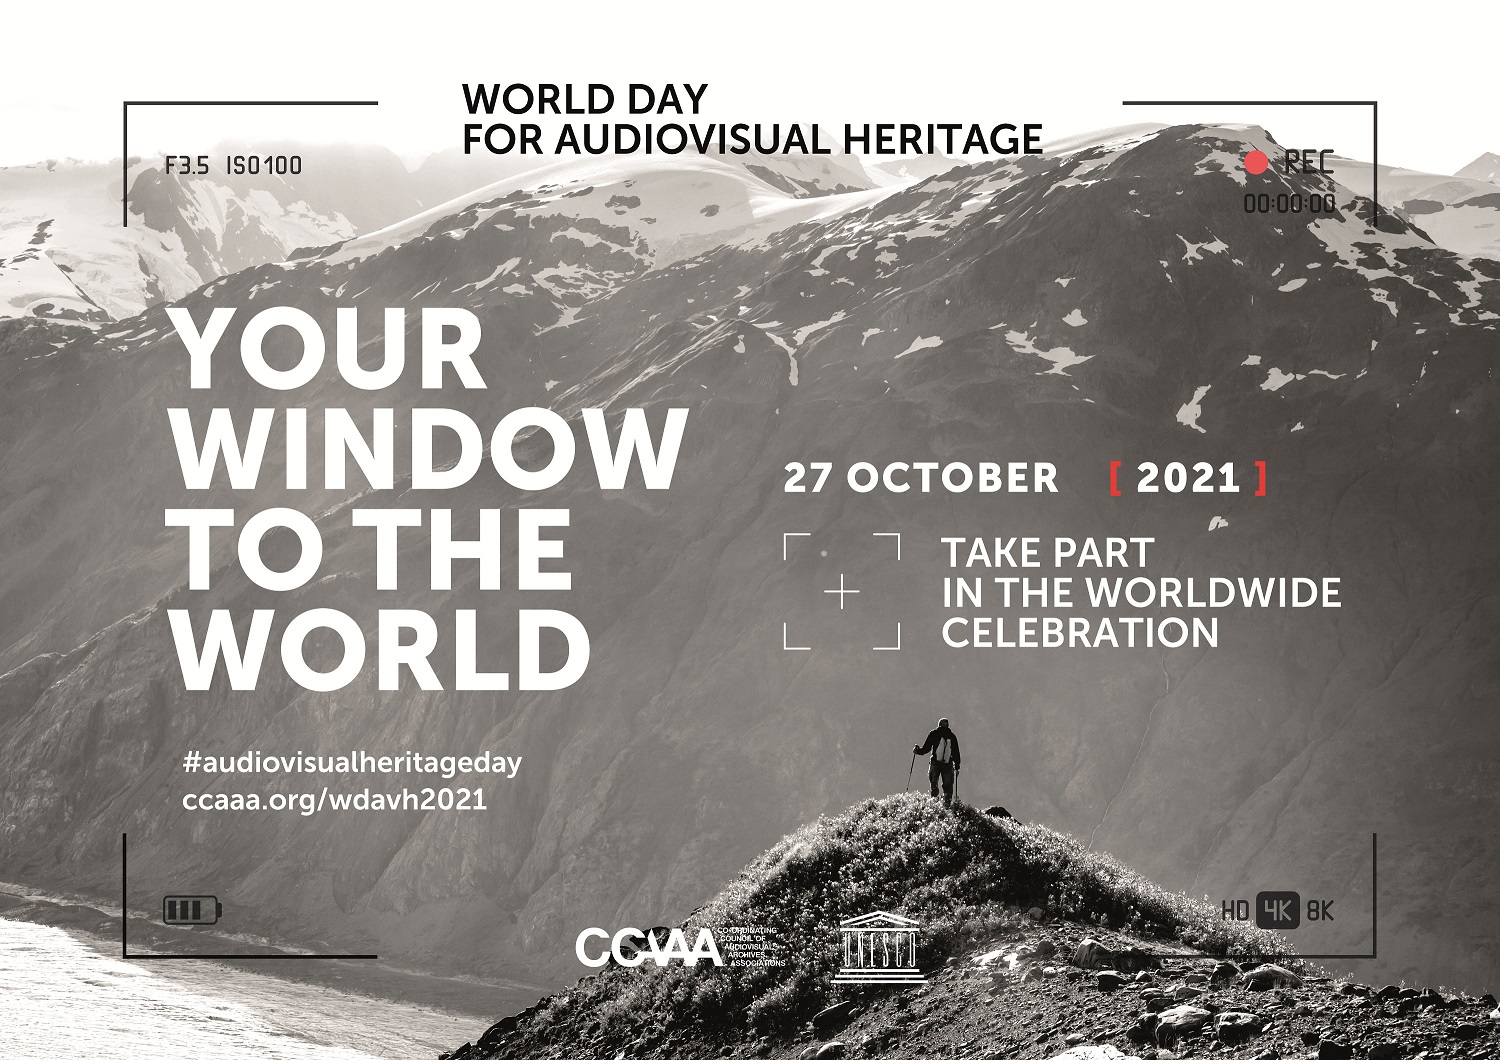 CCAAA - 2021 World Day for Audiovisual Heritage